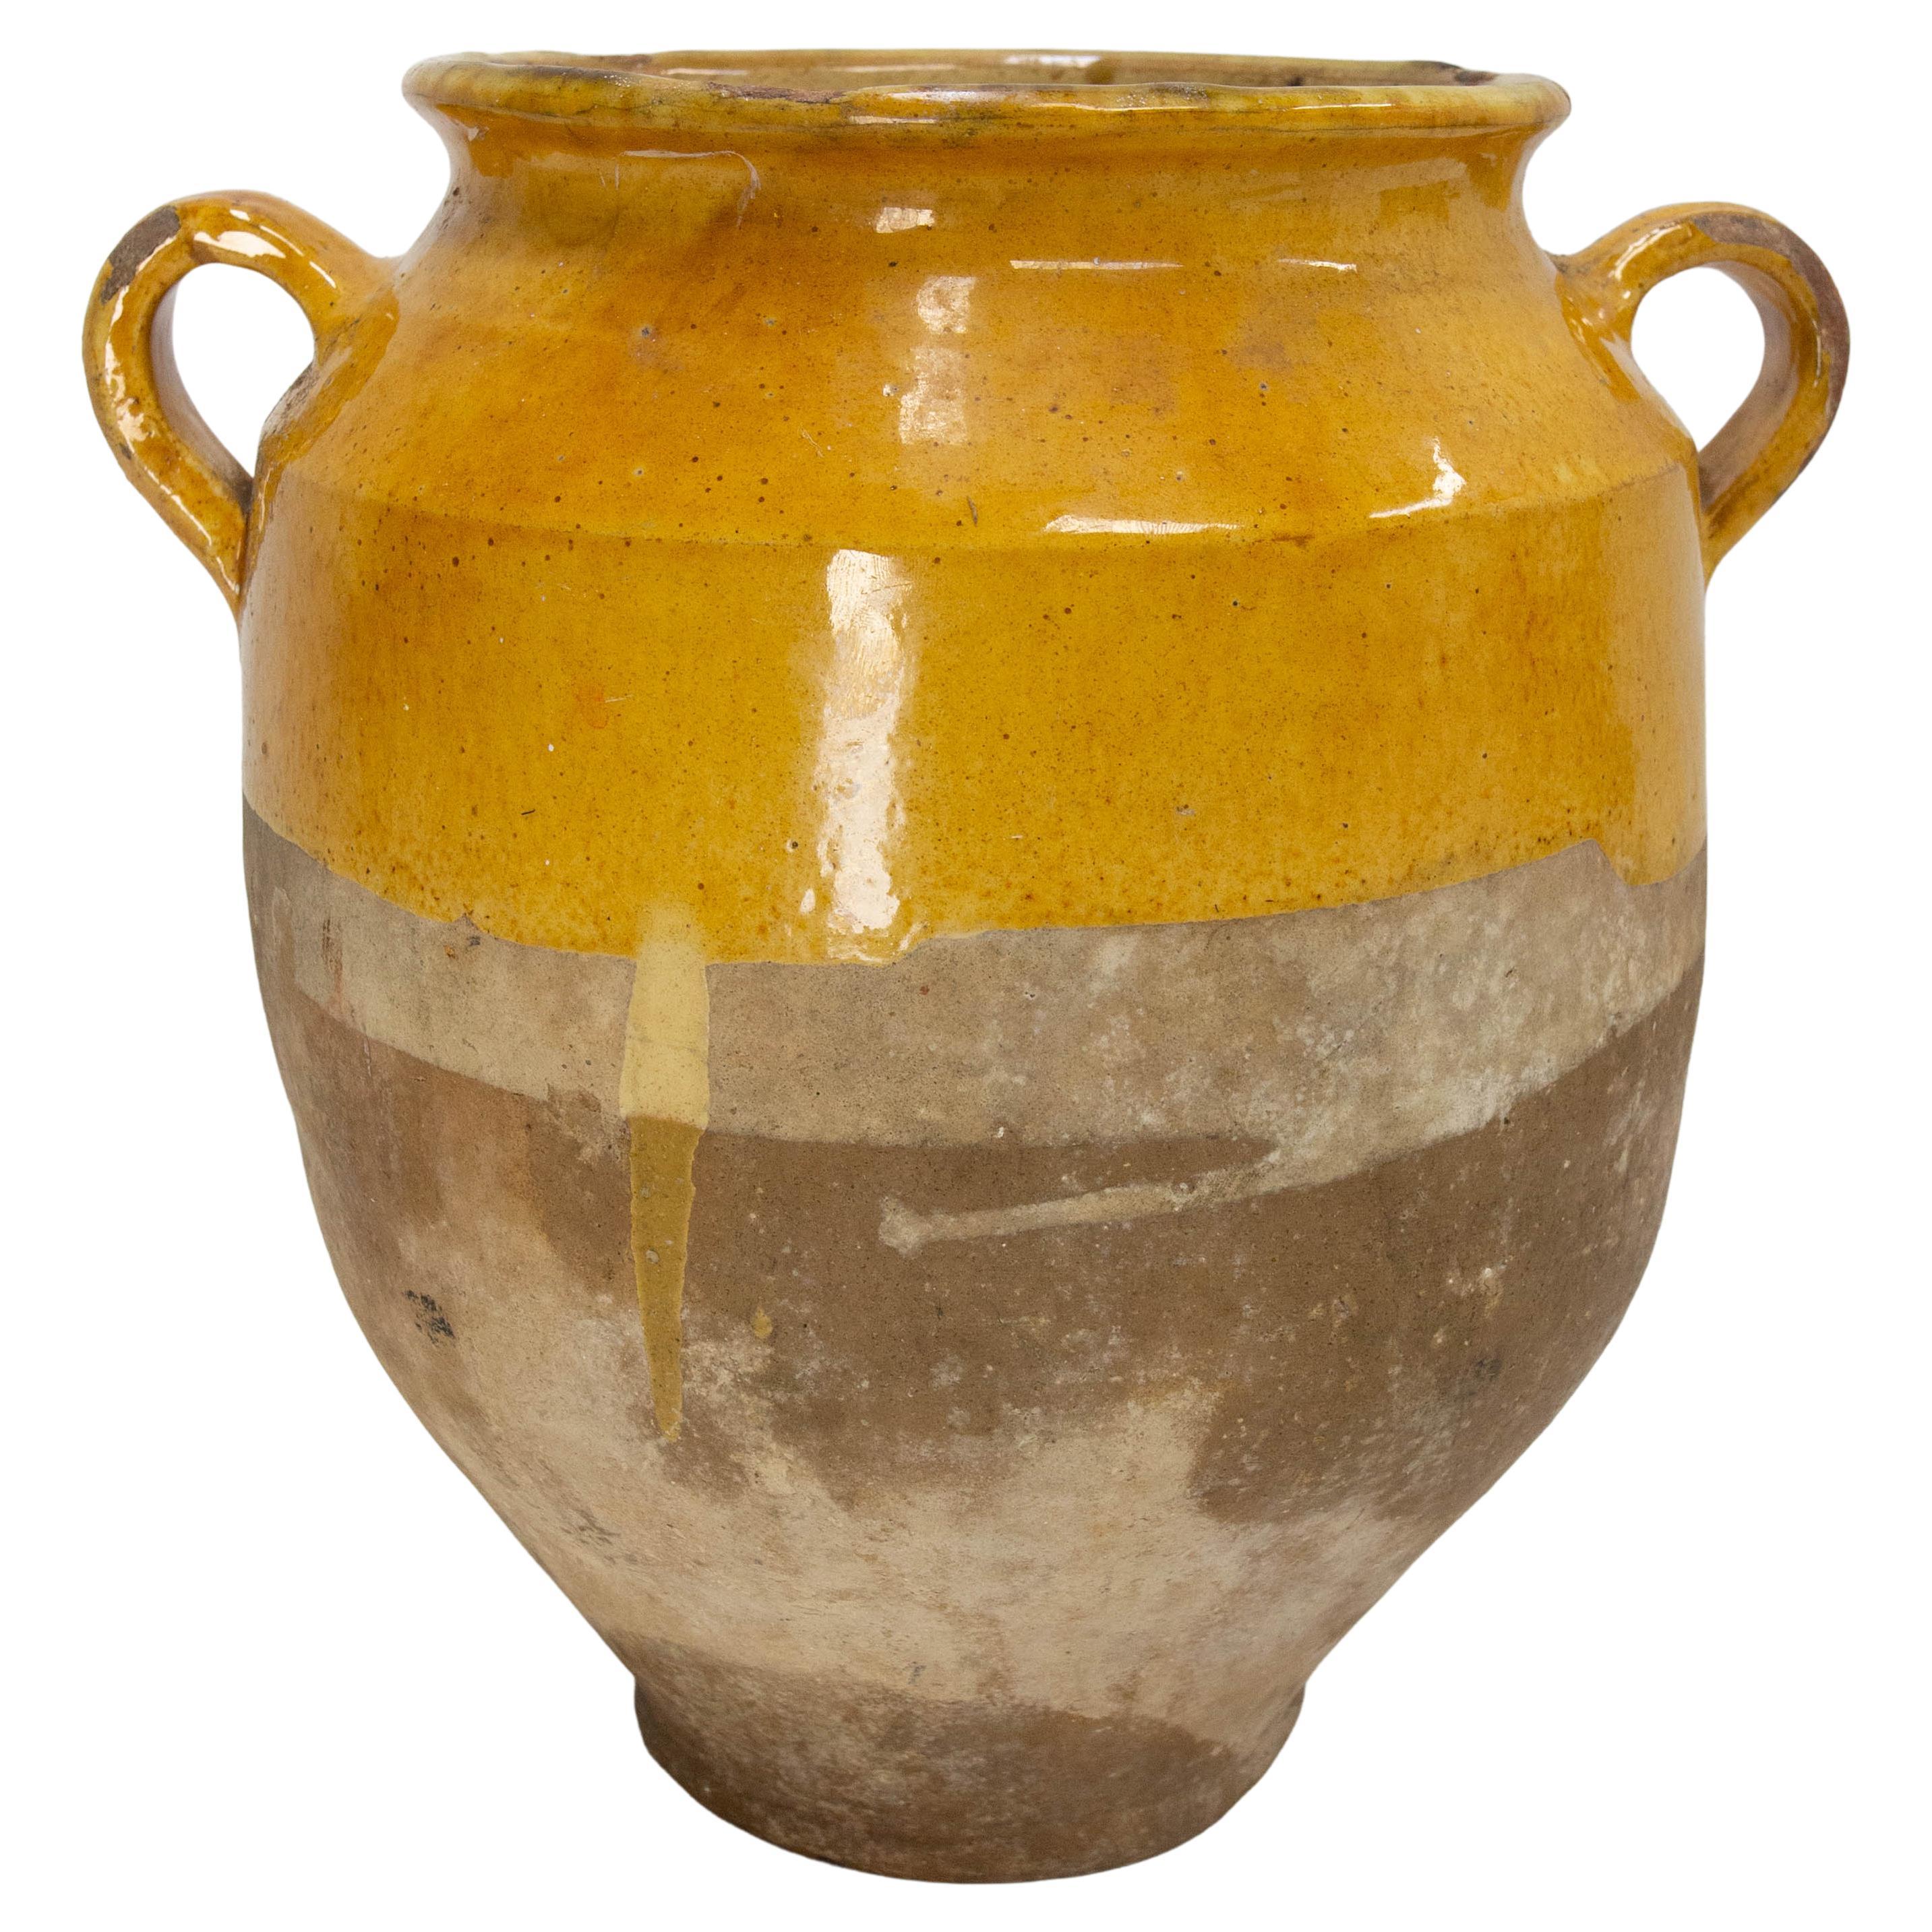 French Terracotta Confit Pot Yellow Glaze Late 19th Century